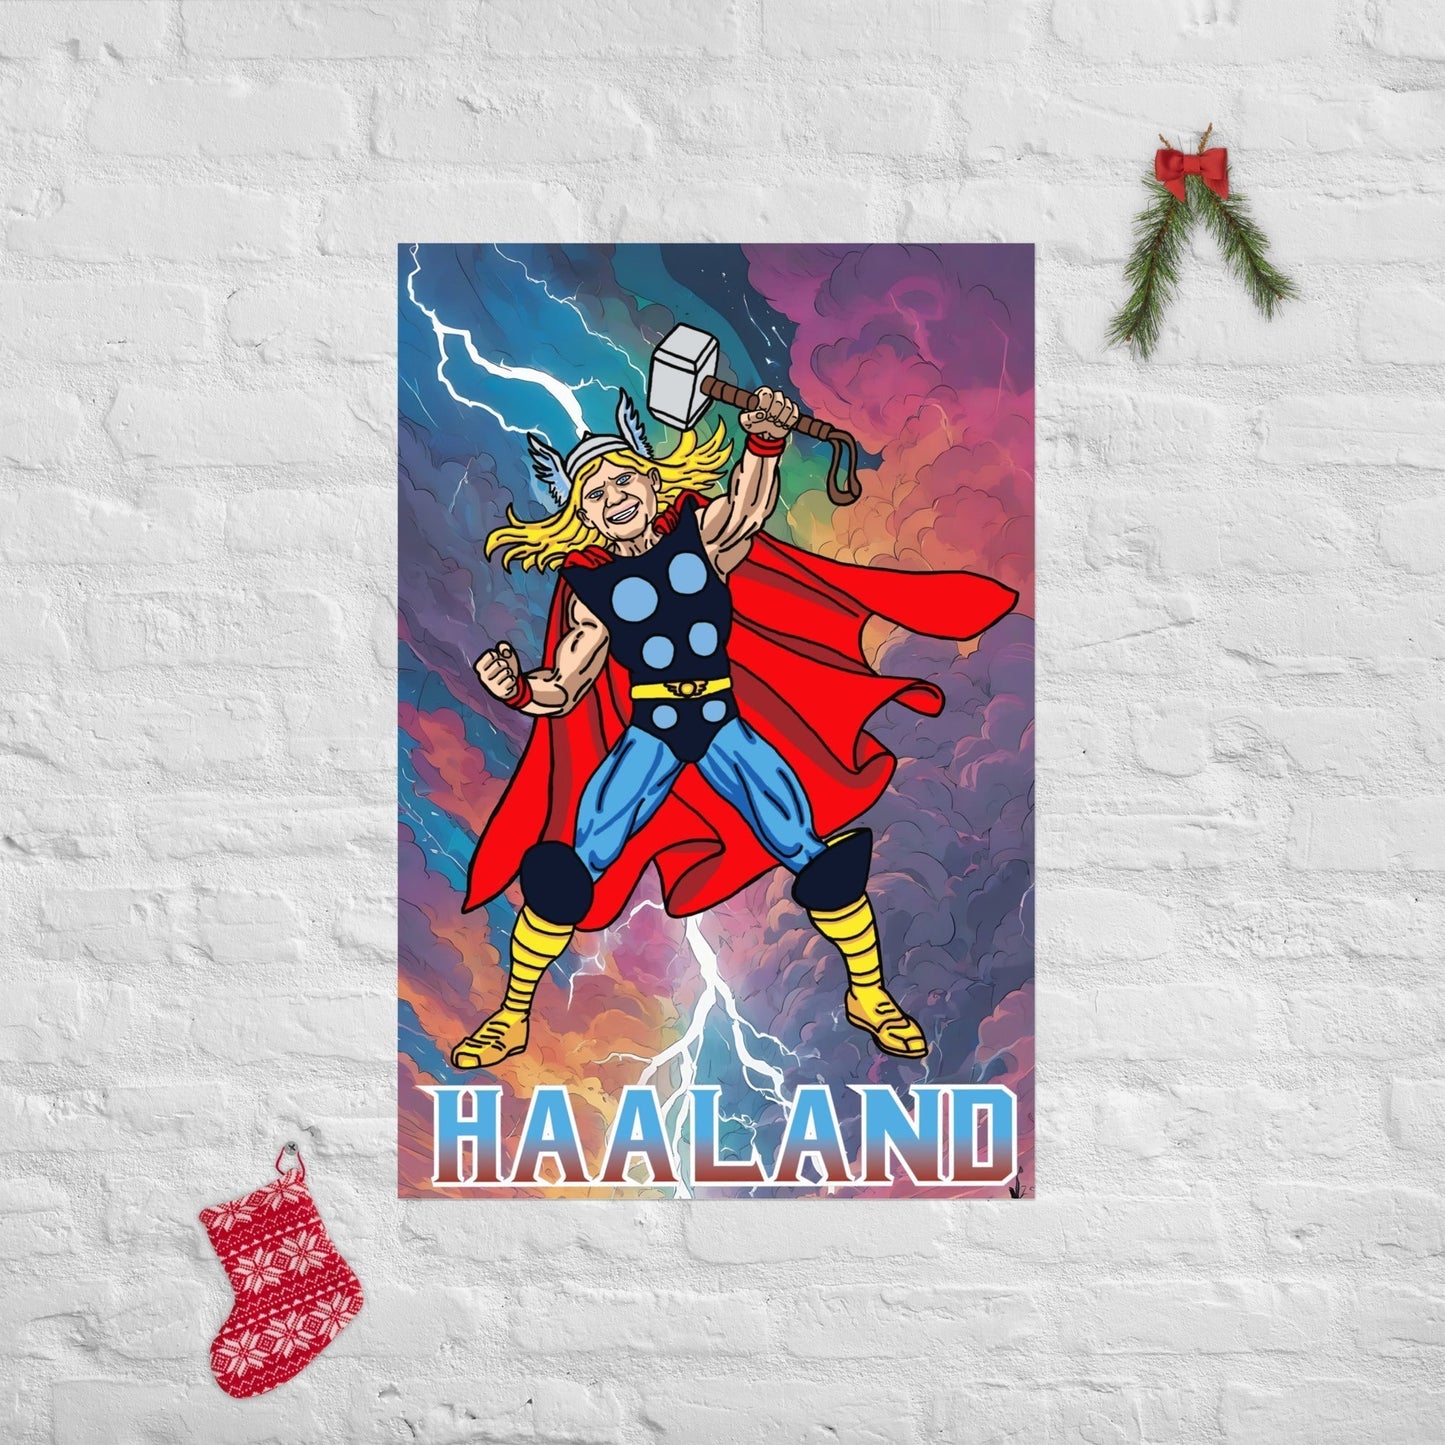 Erling Haaland Thor Avenger Manchester City Funny Football/ Soccer Meme Poster Next Cult Brand Erling Haaland, Football, Manchester City, Thor